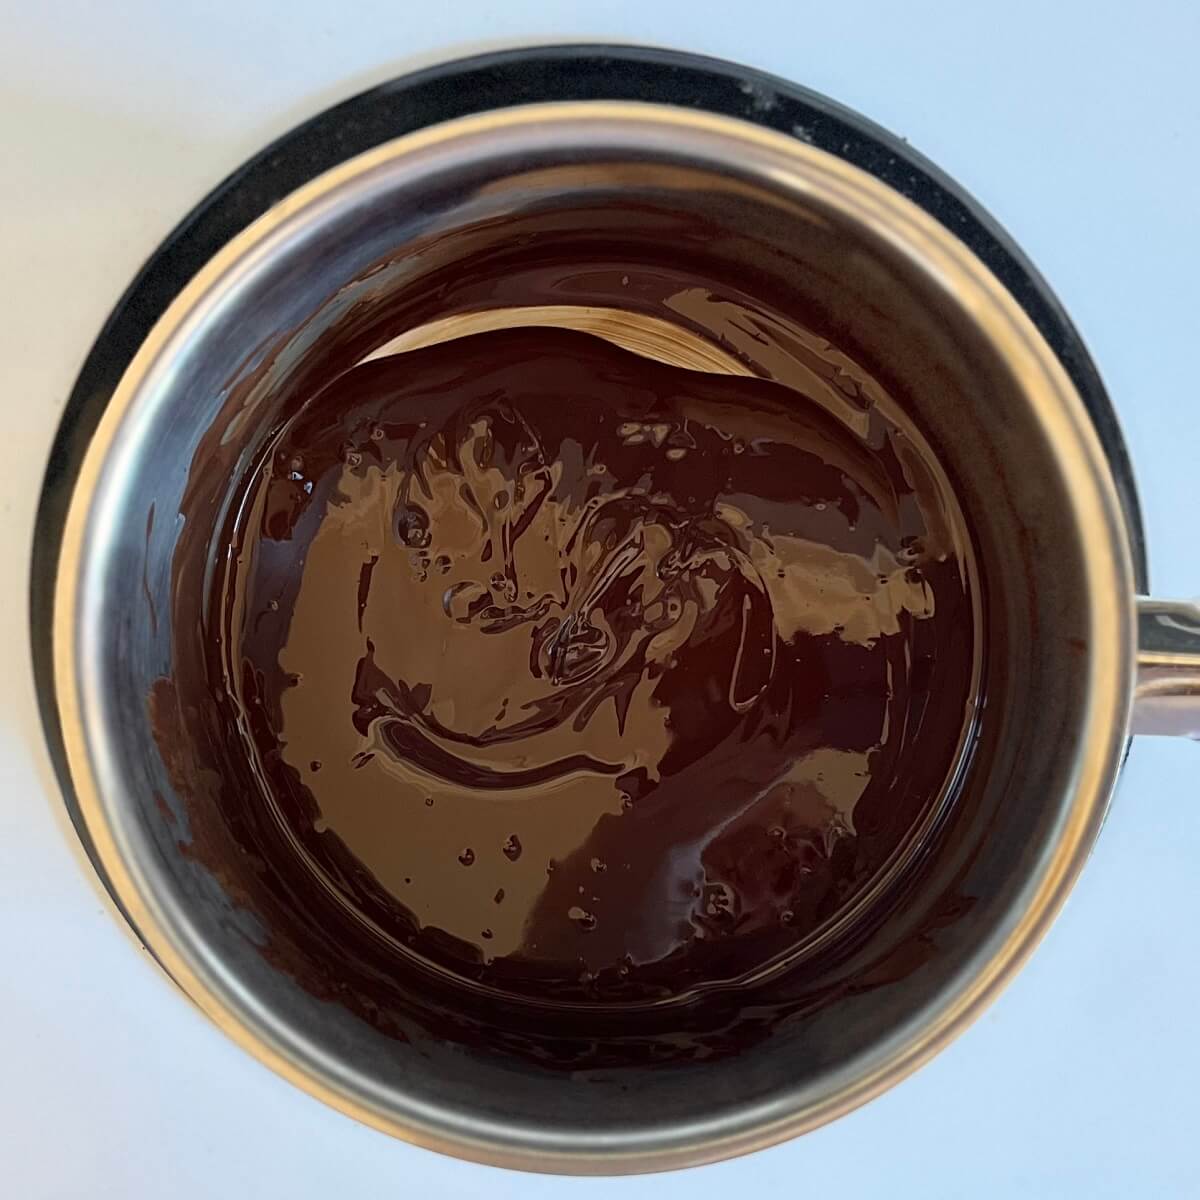 Warm melted dark chocolate in a steel pot.